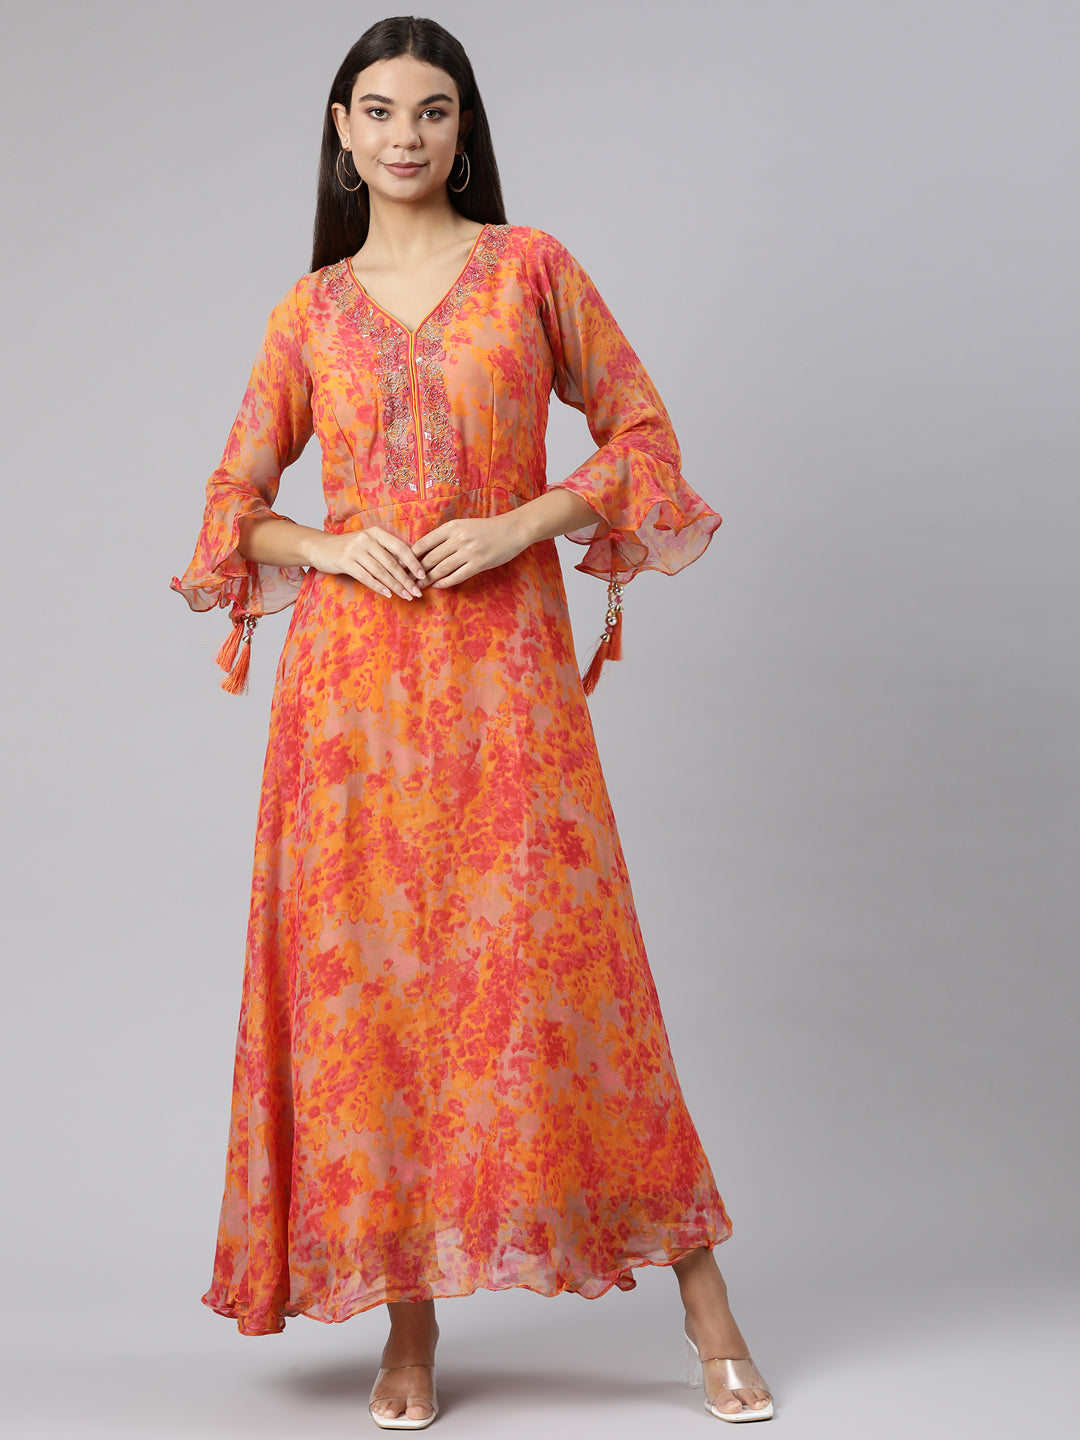 Neeru's Orange Straight Casual Floral Dresses